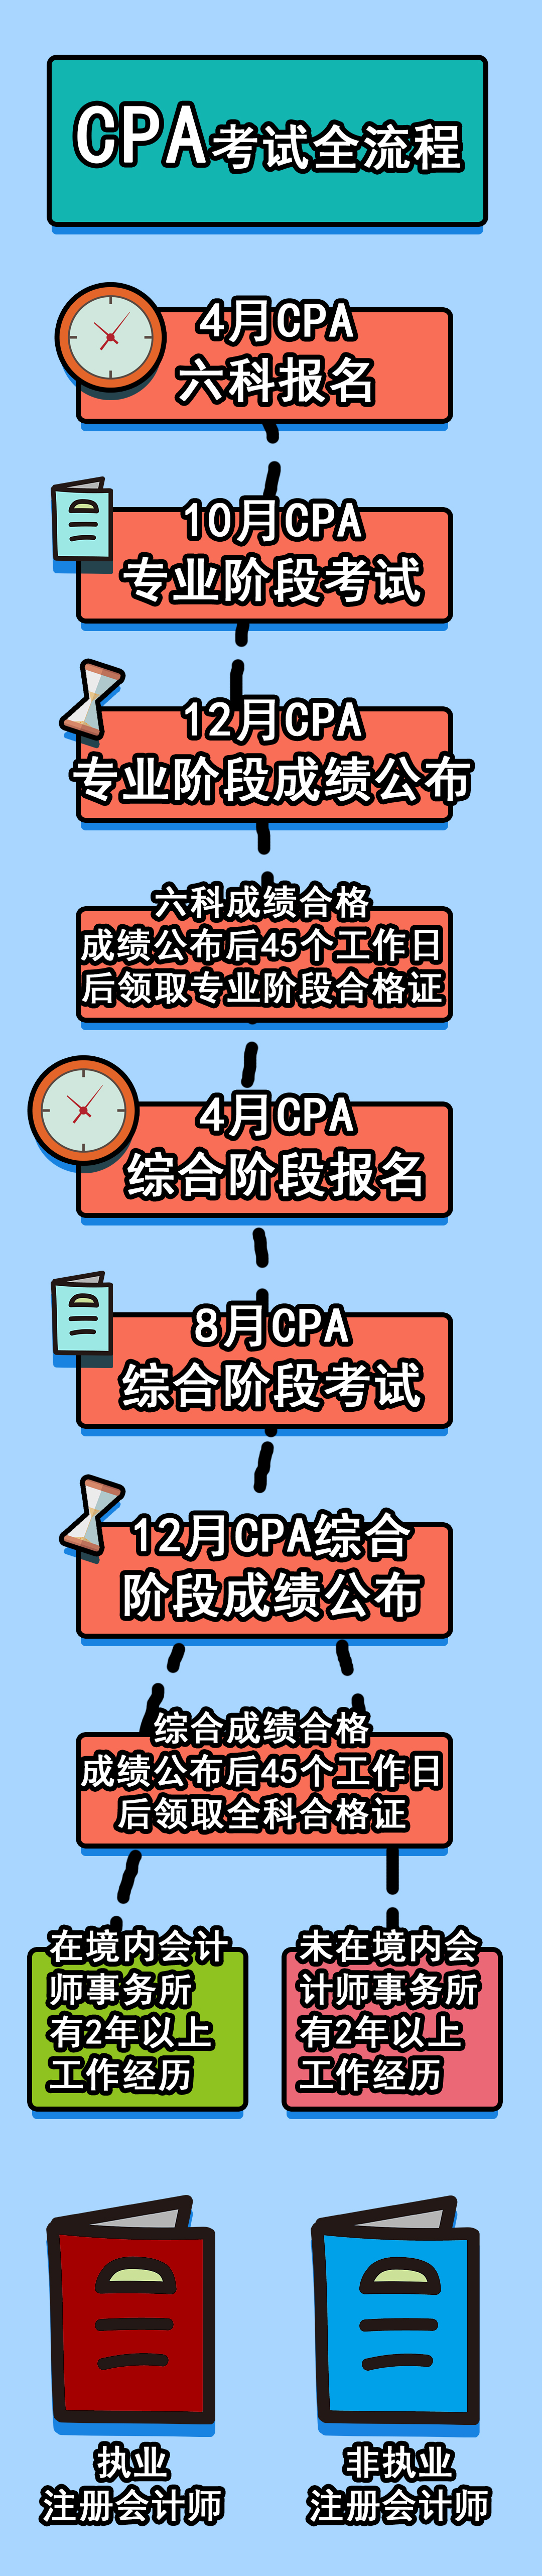 CPA考试时间流程.png